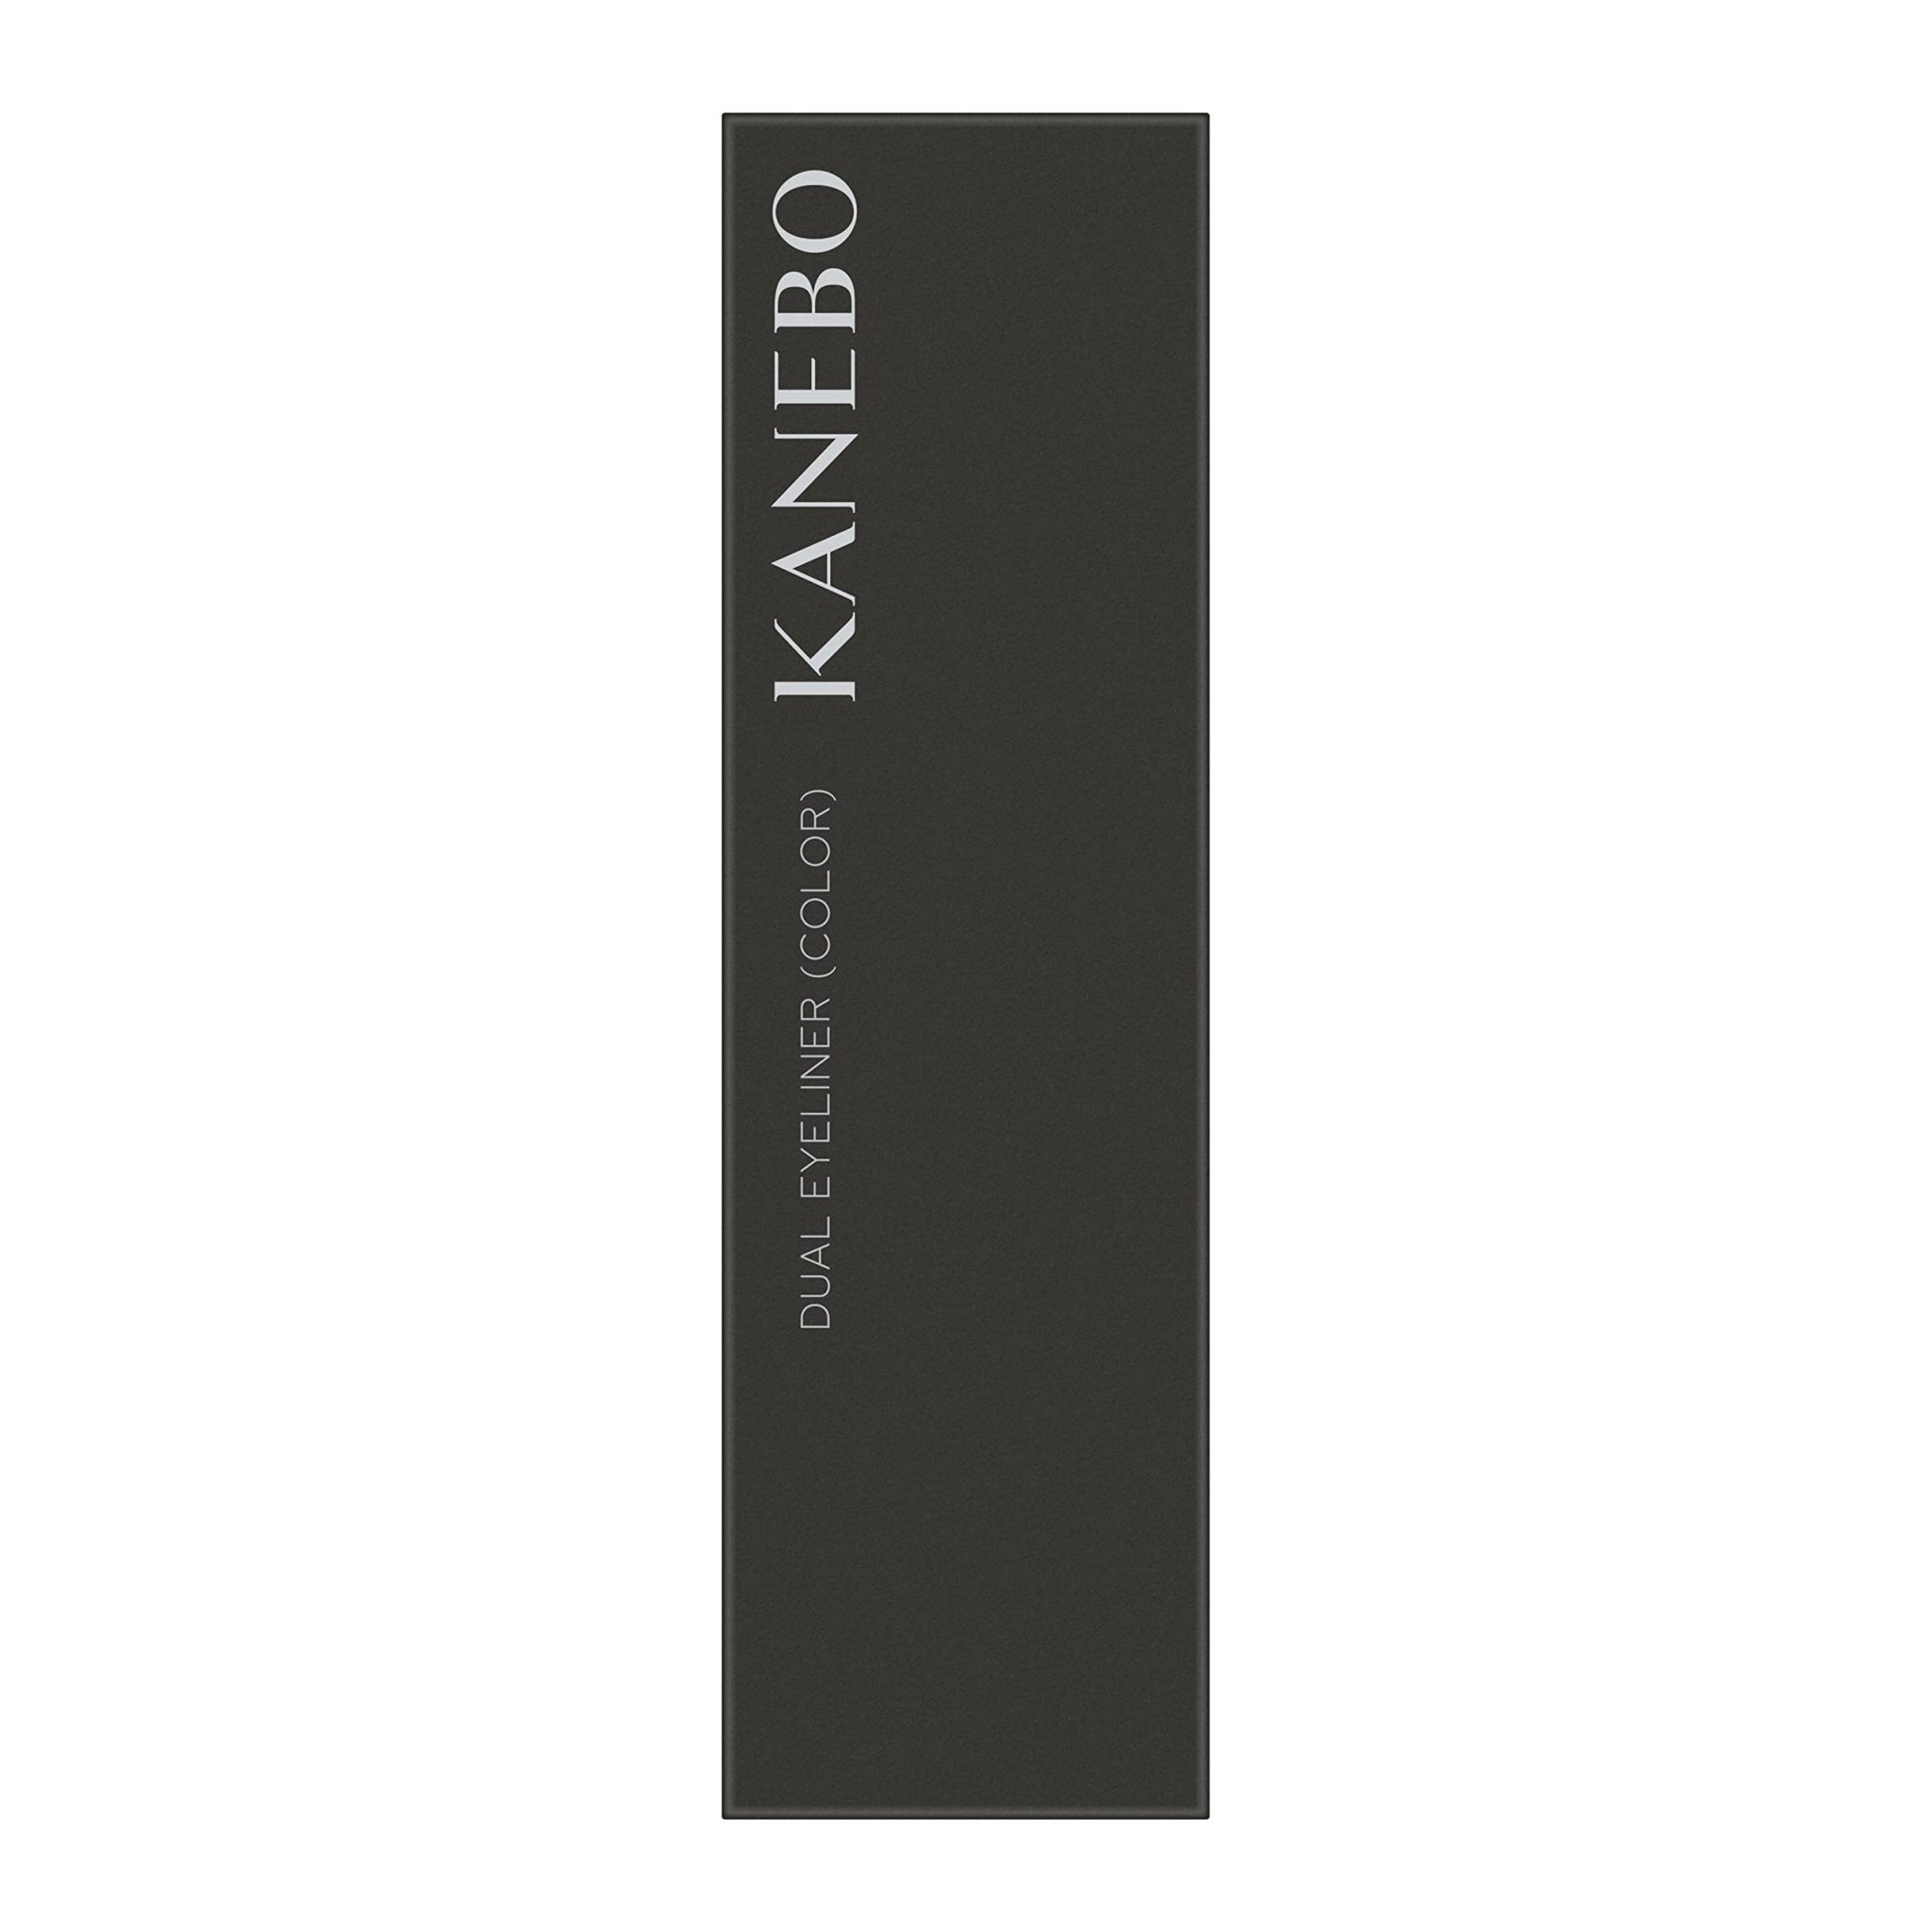 Kanebo Dual Eyeliner in Mimic Red EC02 0.35ml - Long - Lasting Eye Makeup